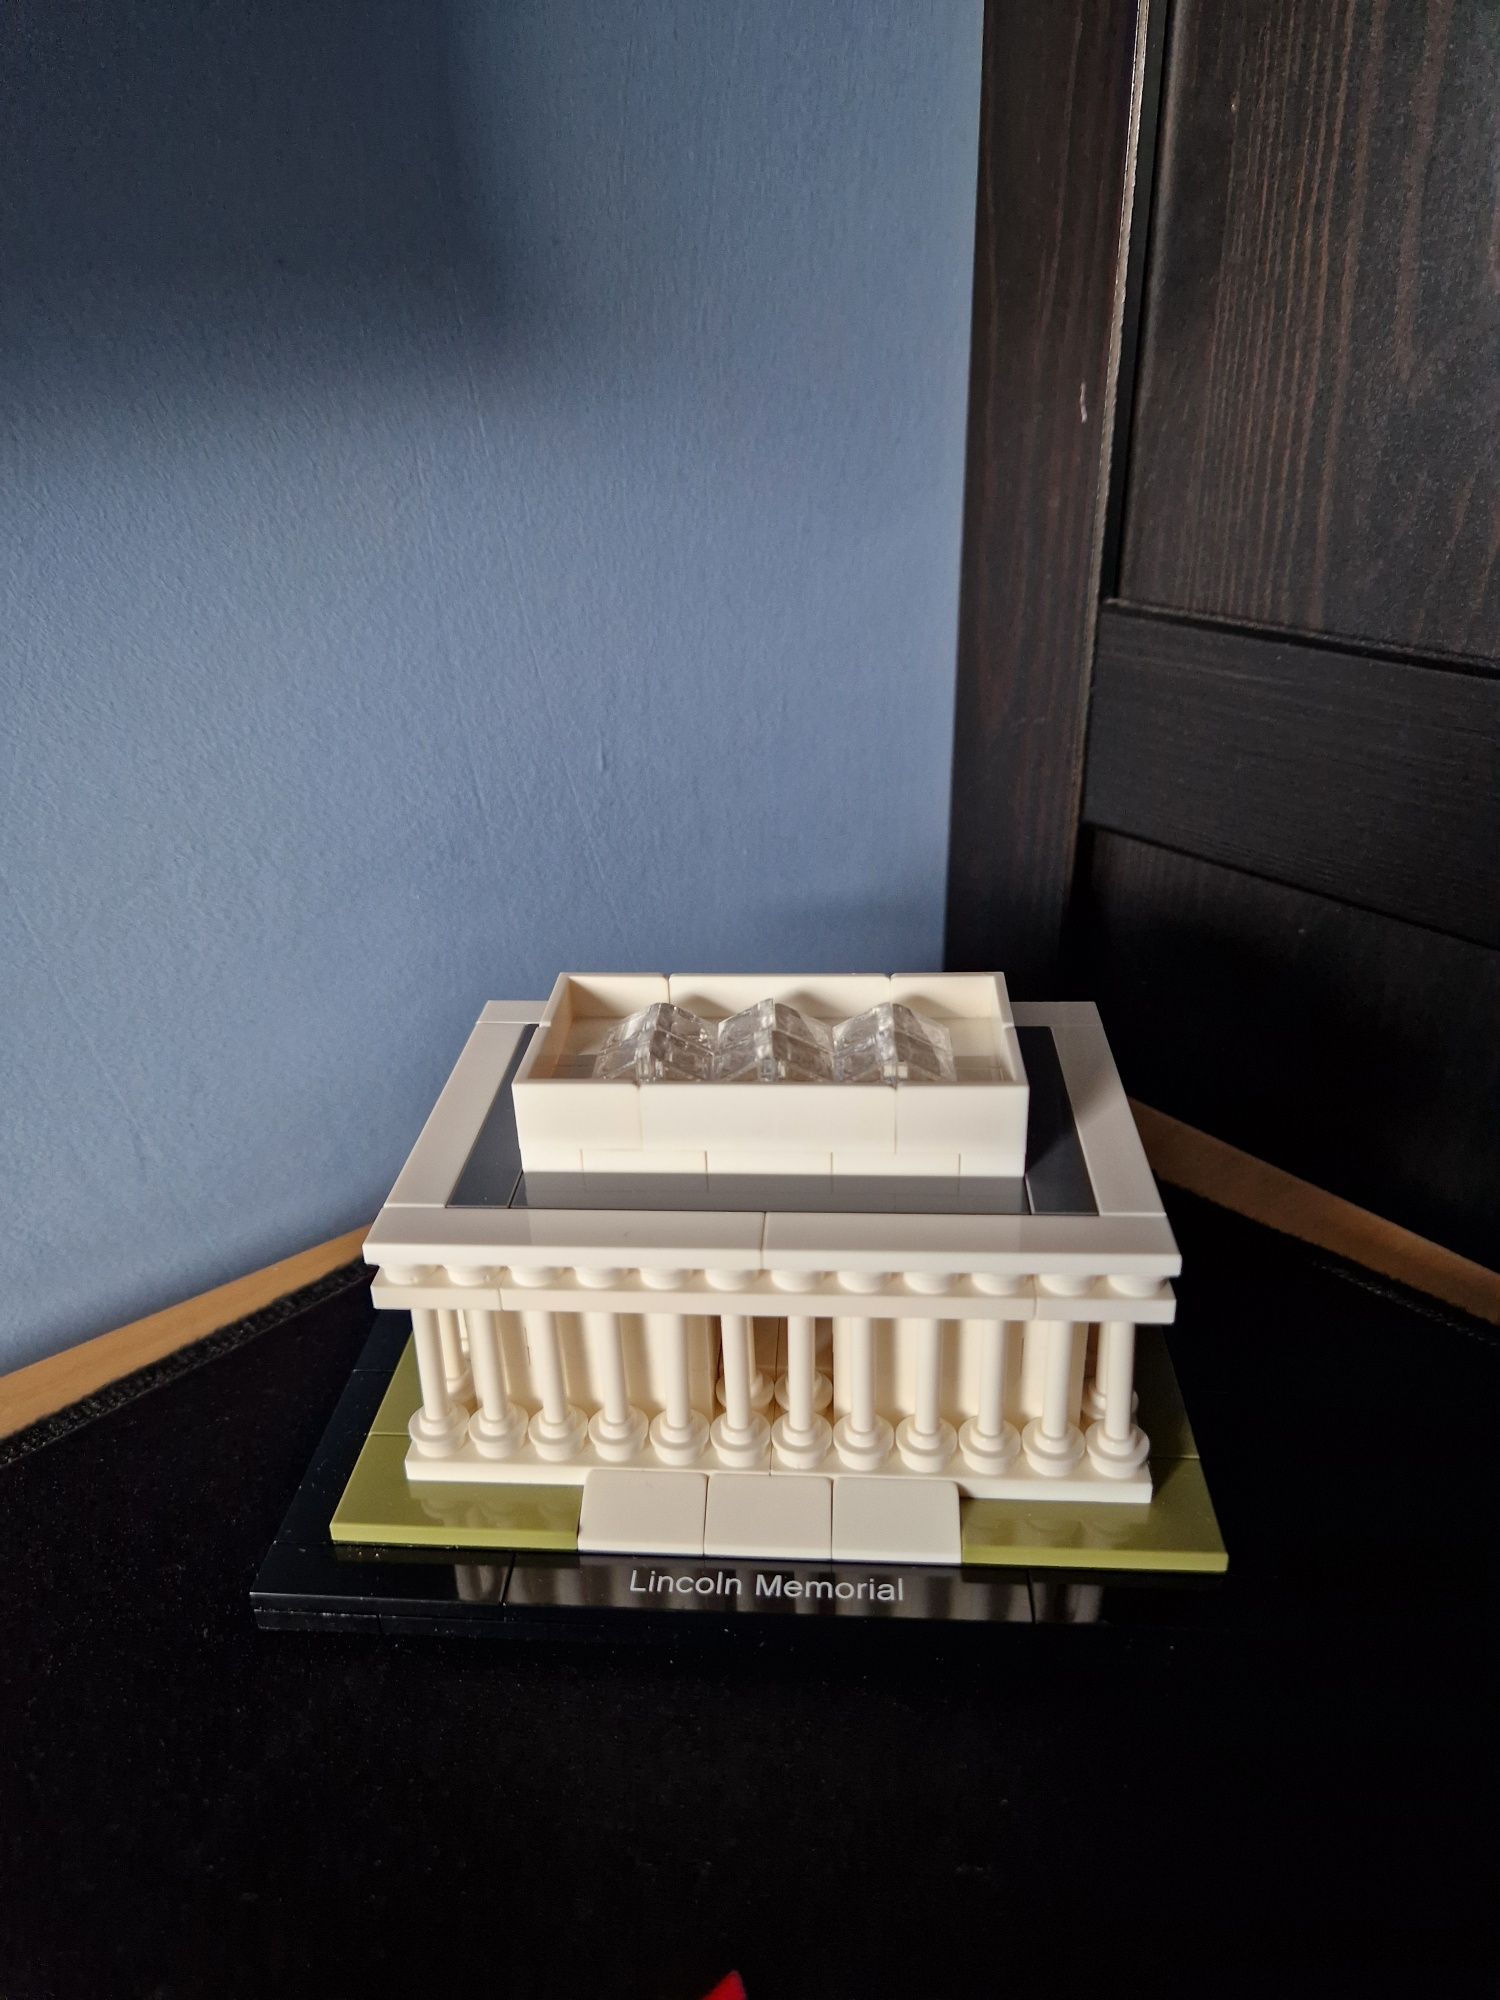 Lego Lincoln Memorial Architecture 21022 Kompletny Klocki